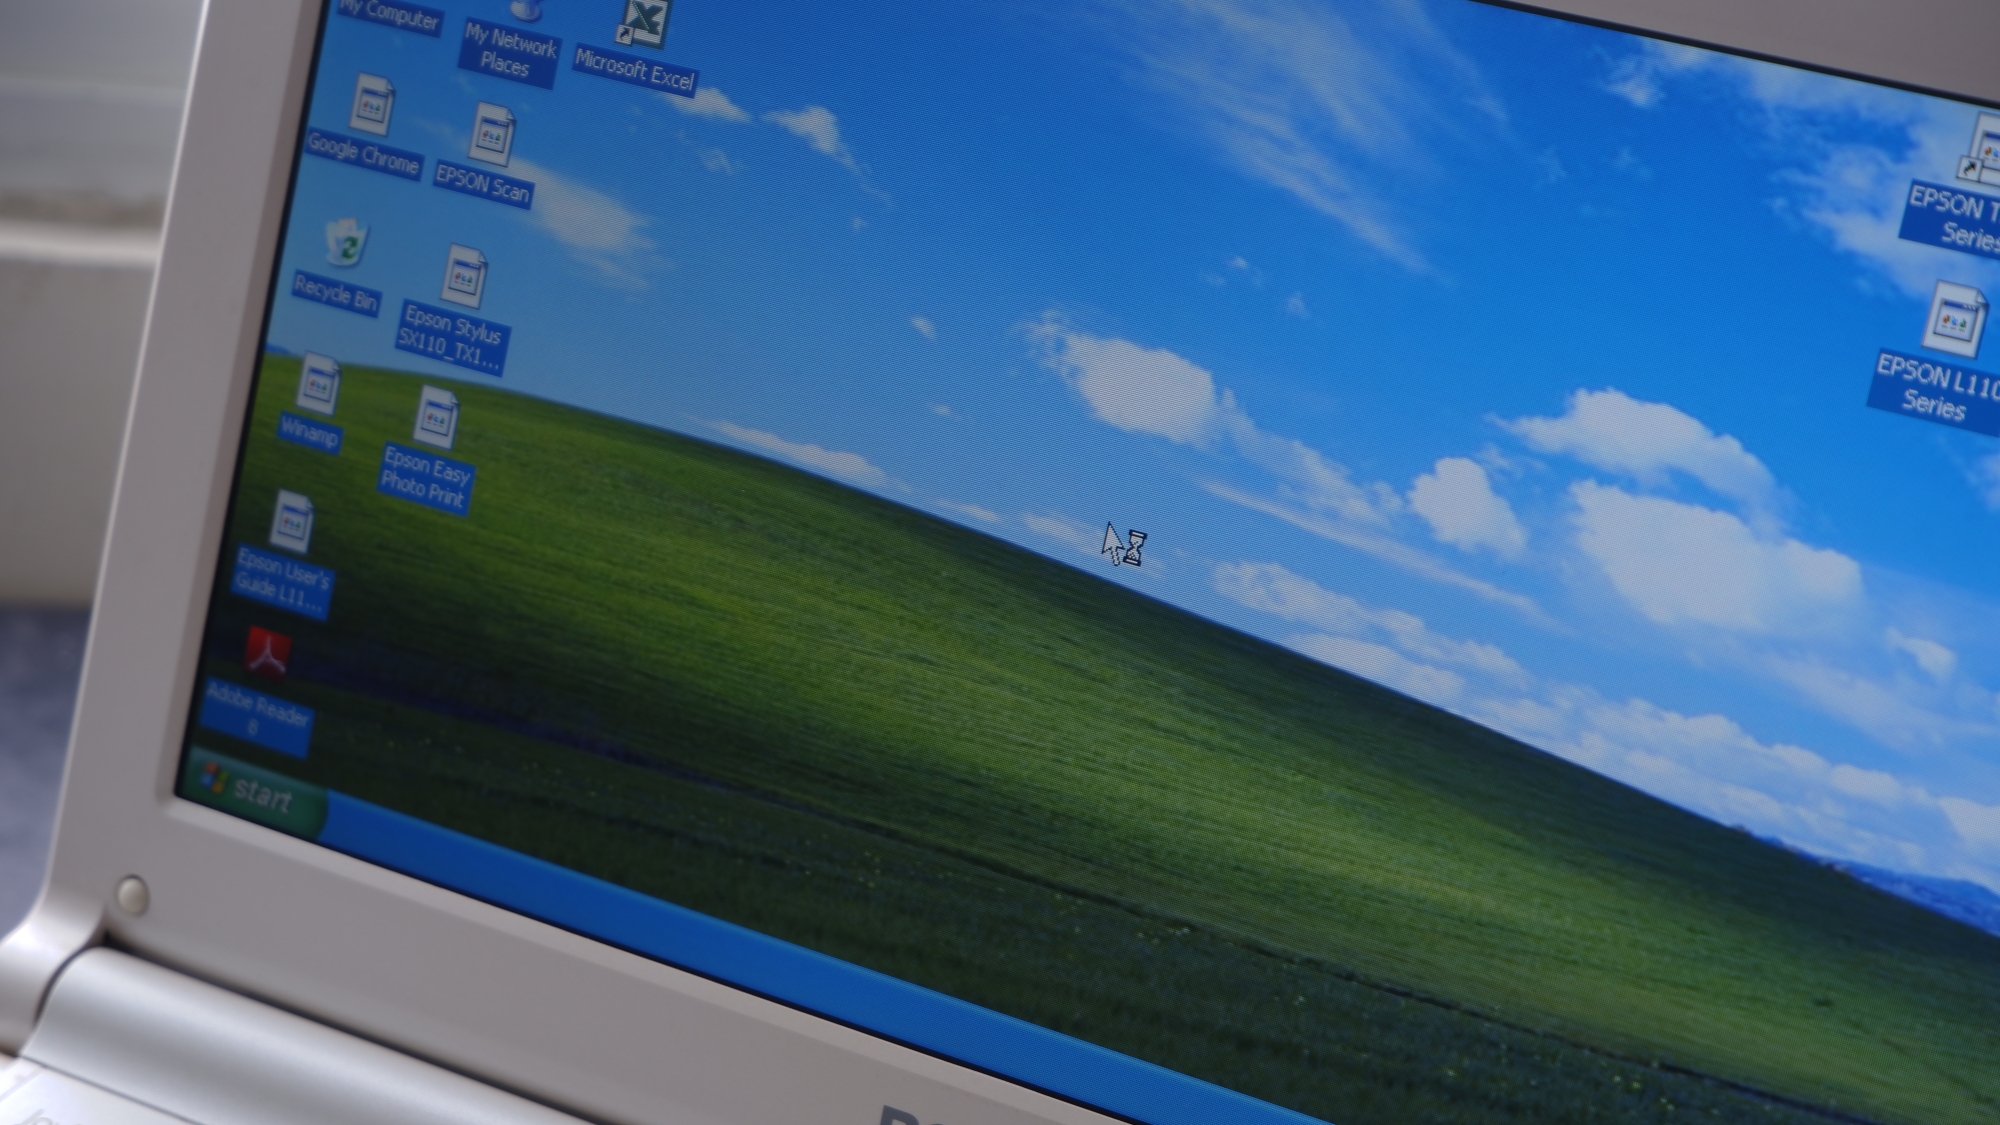 Windows XP Bliss wallpaper on a laptop